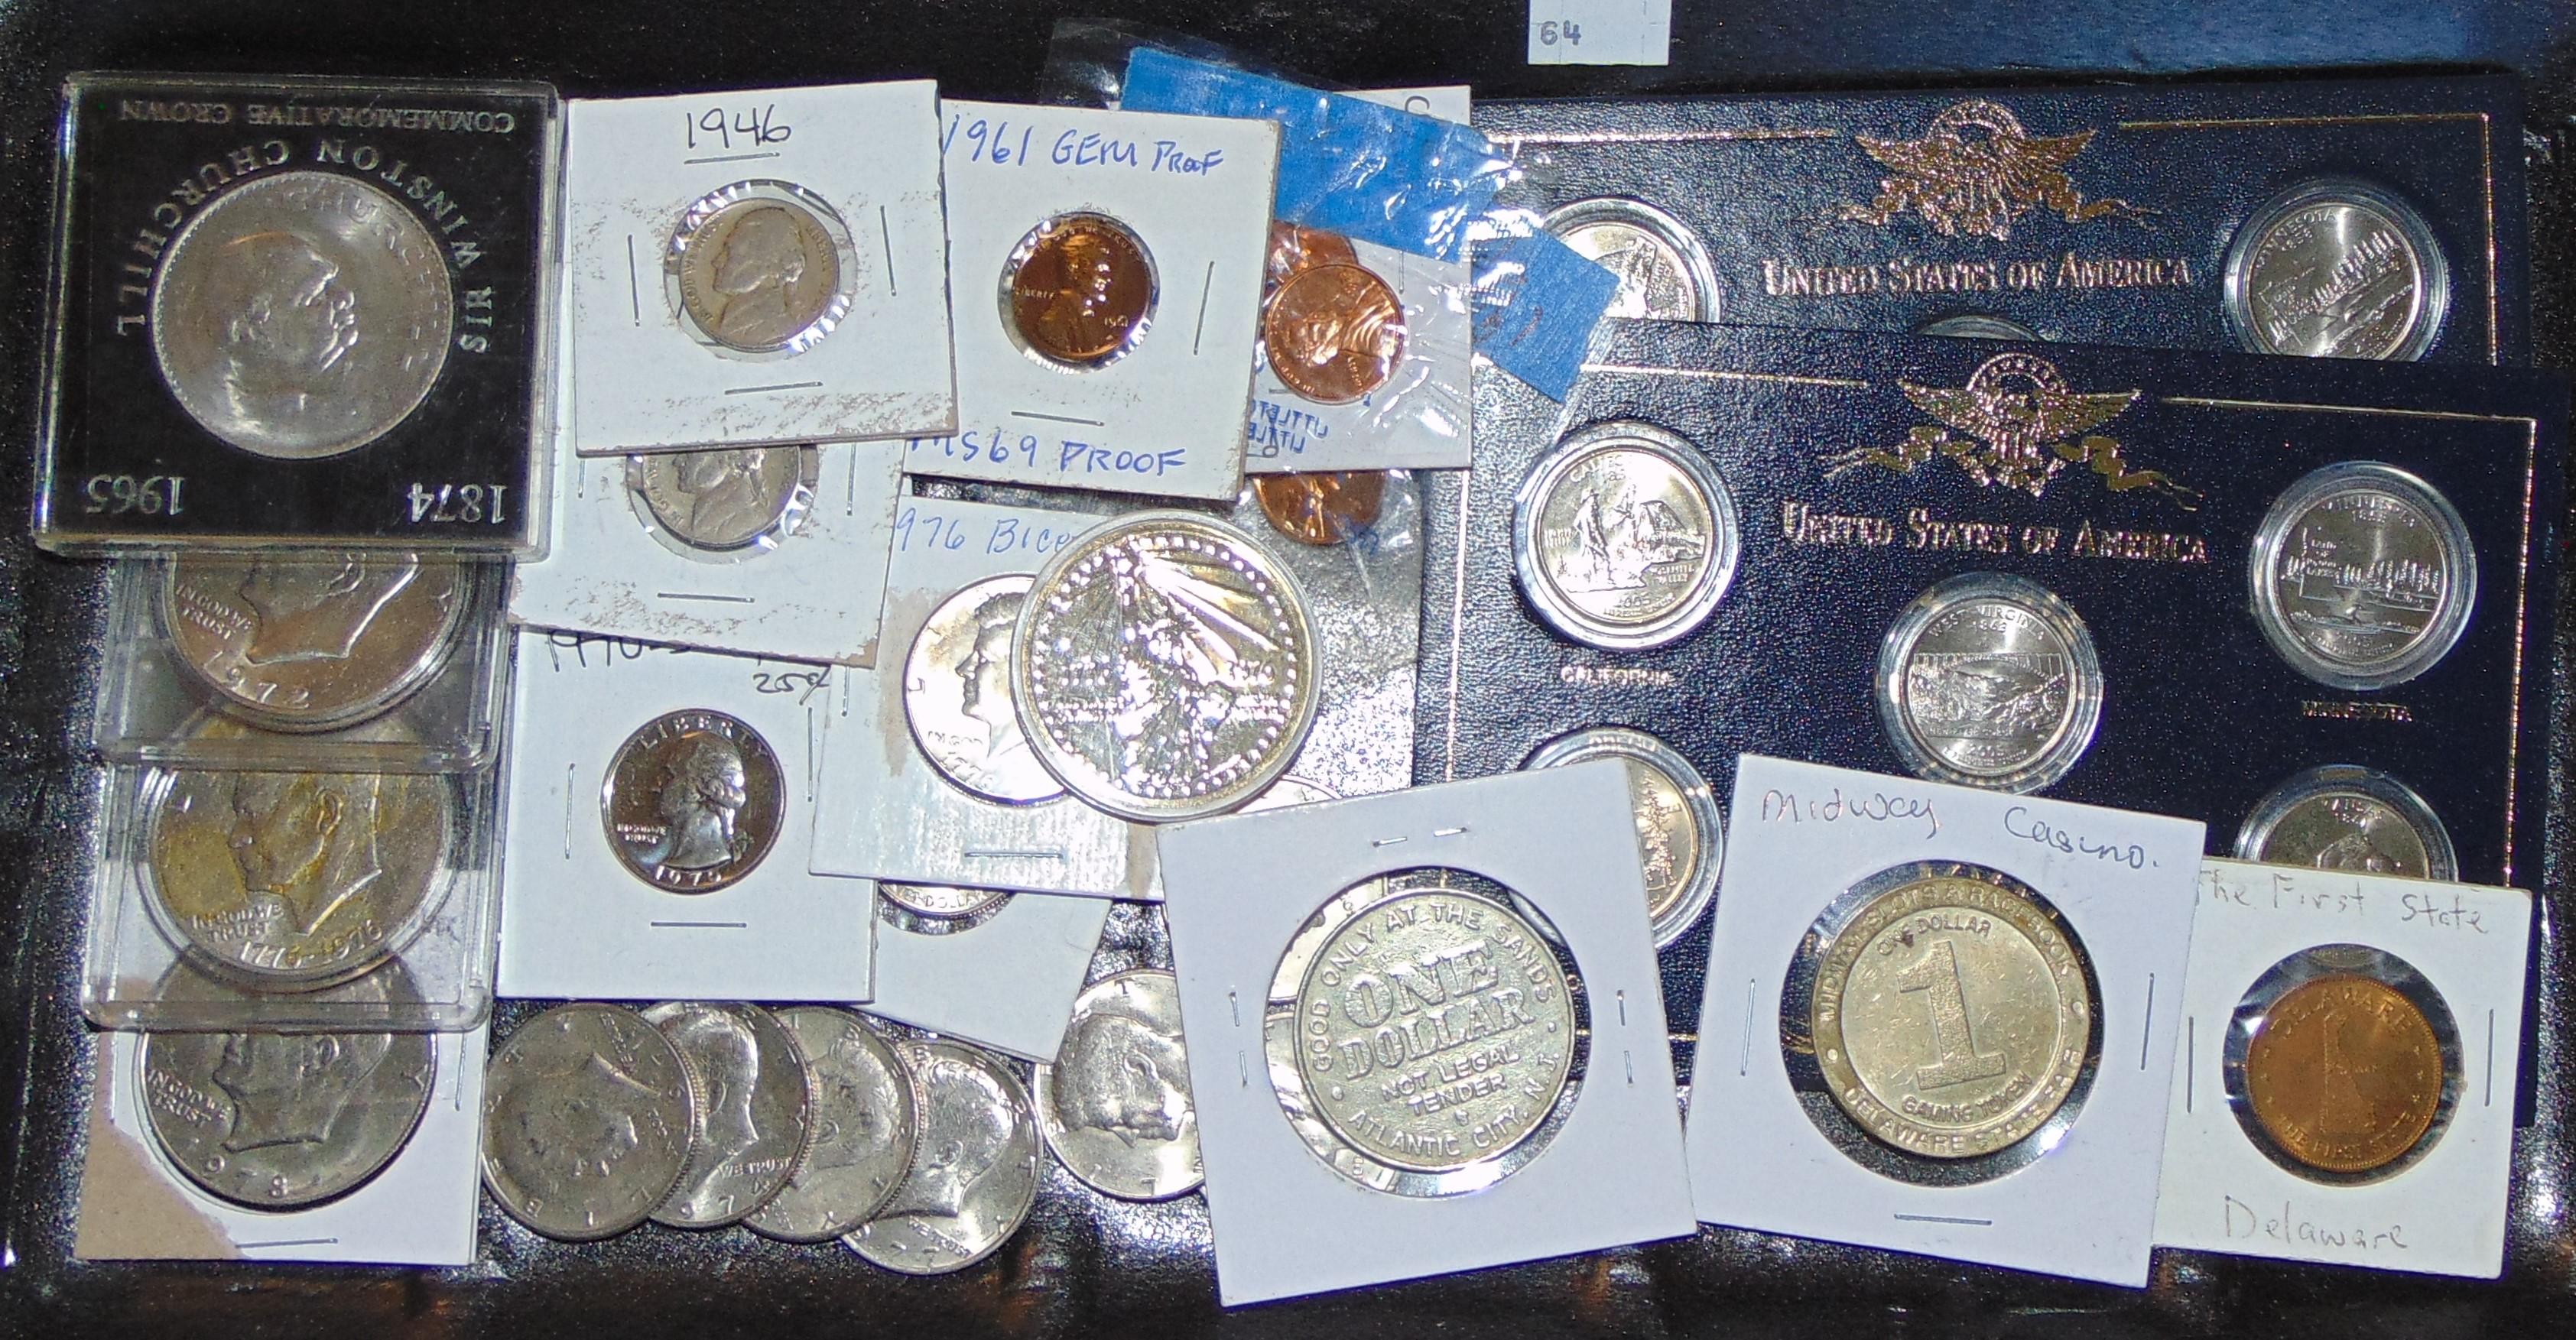 $11.20 face value Modern Coins. 4 Medallions.